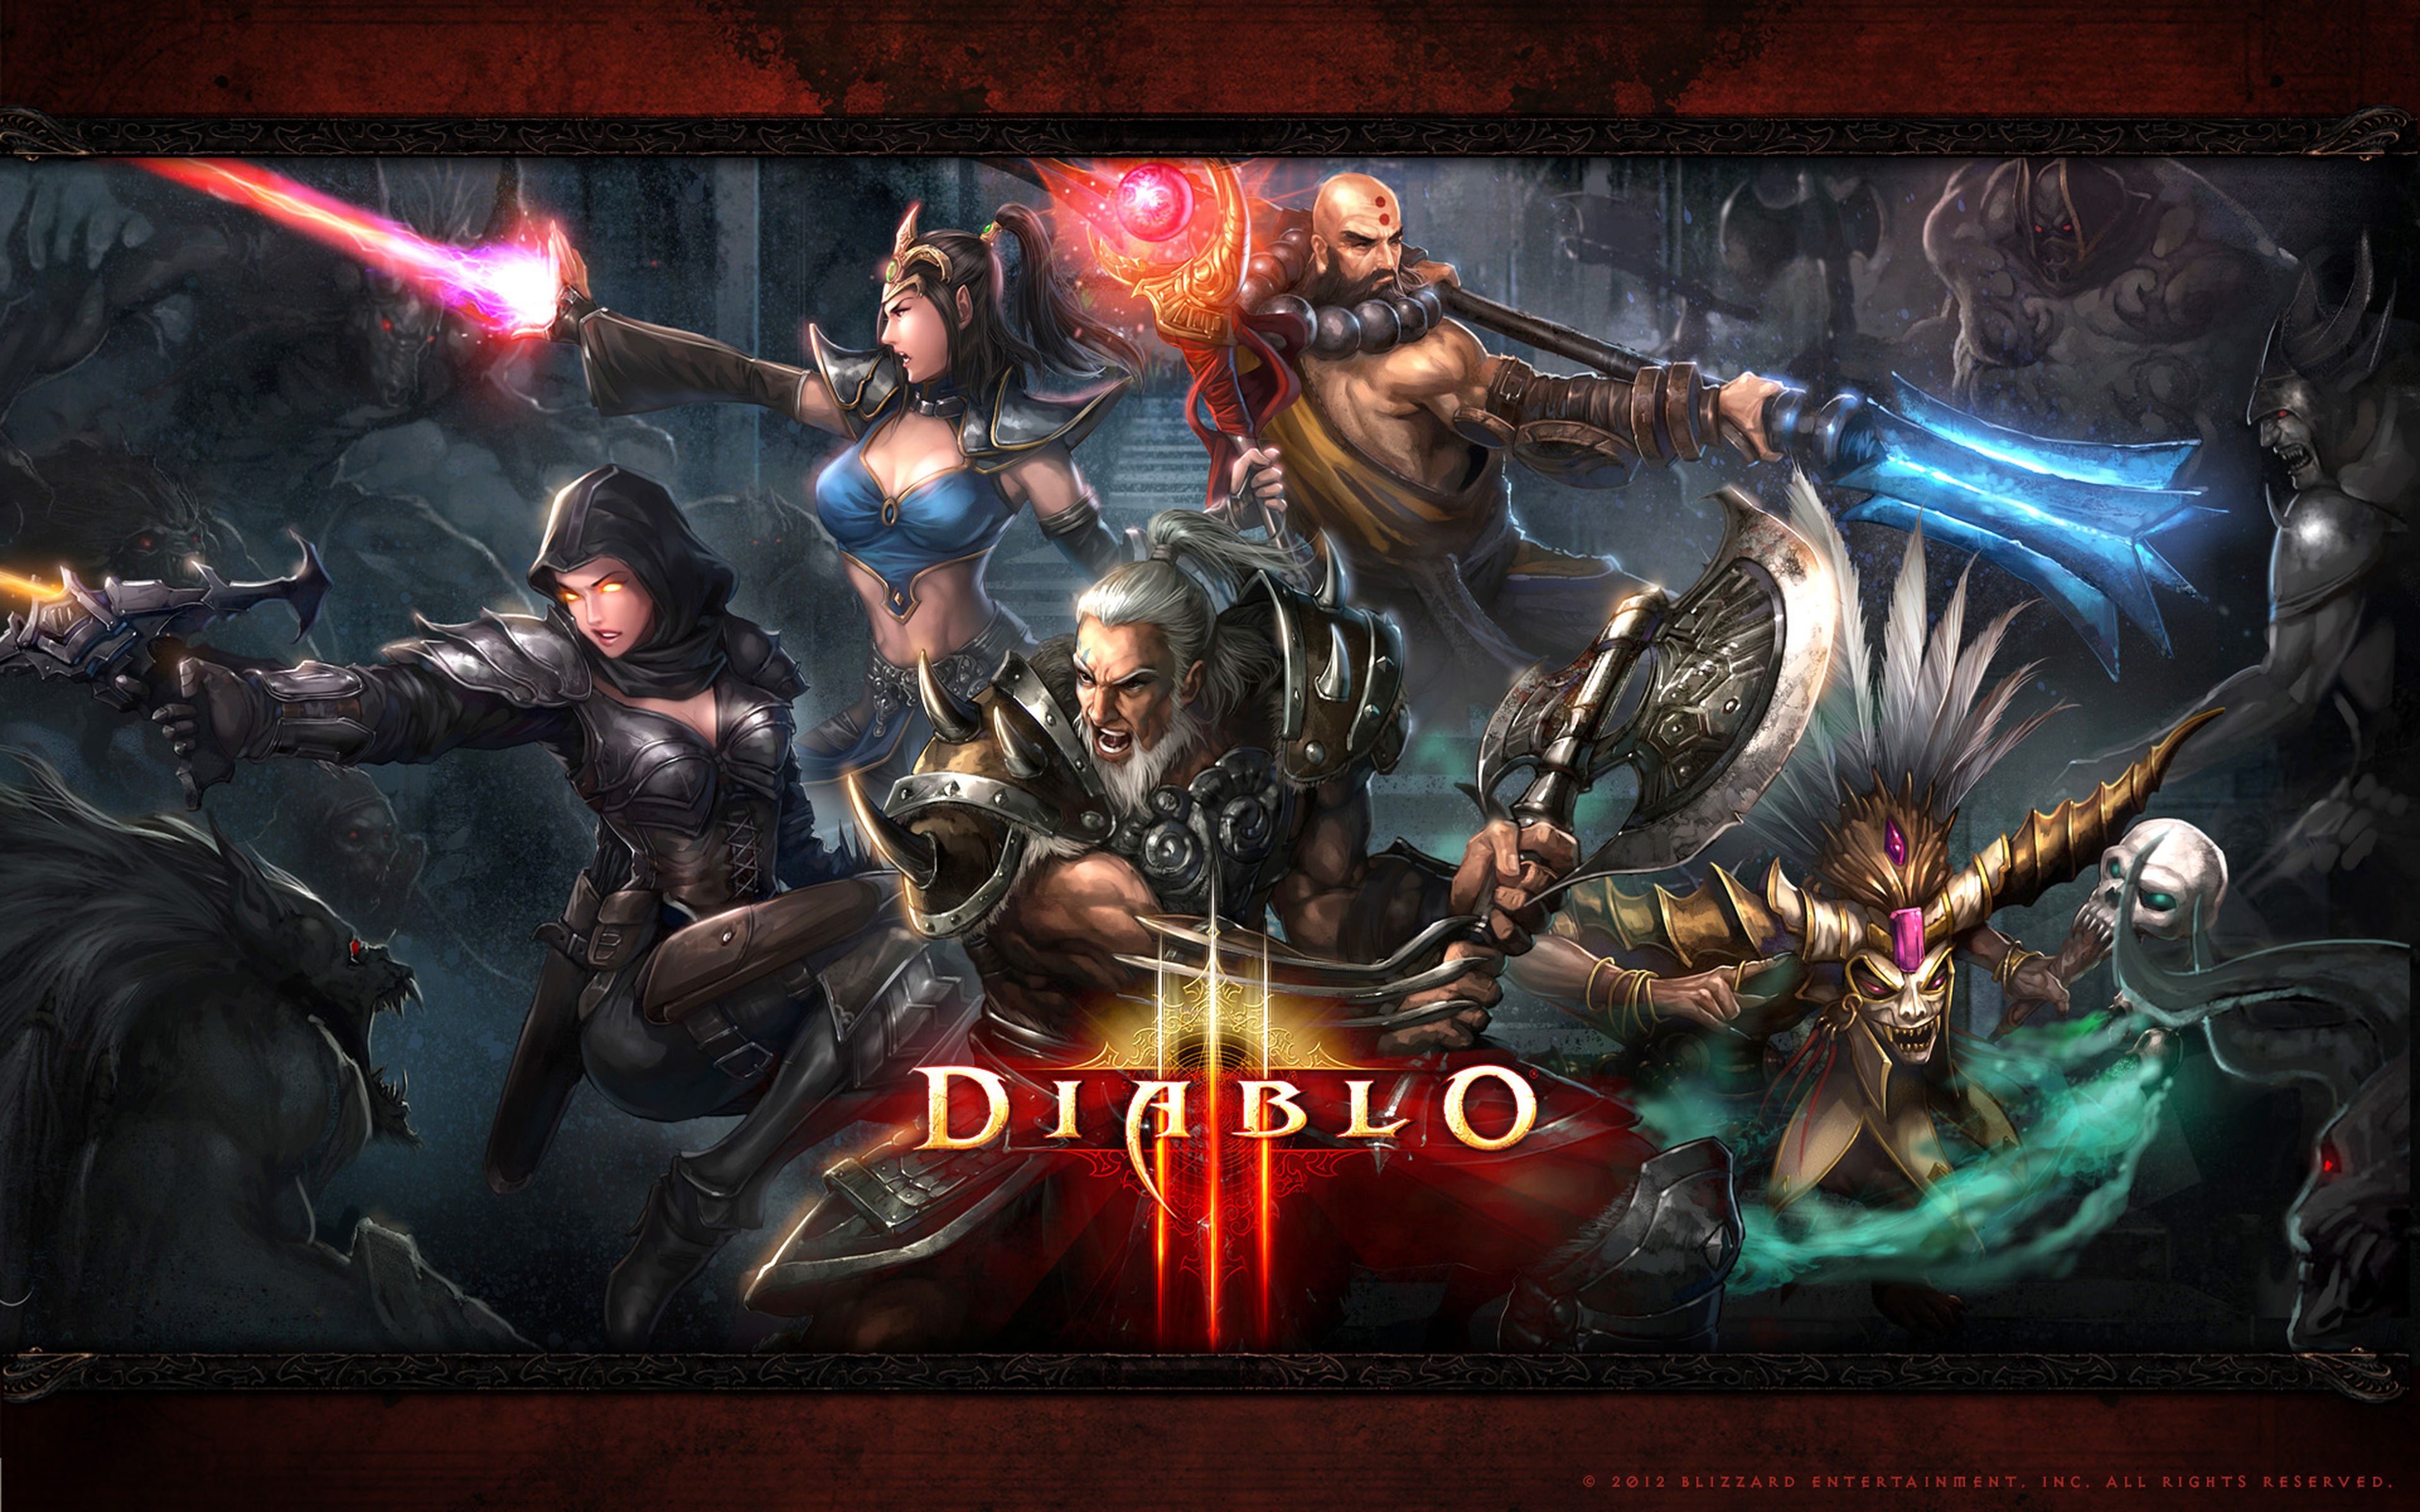 Diablo III - A Different Perspective